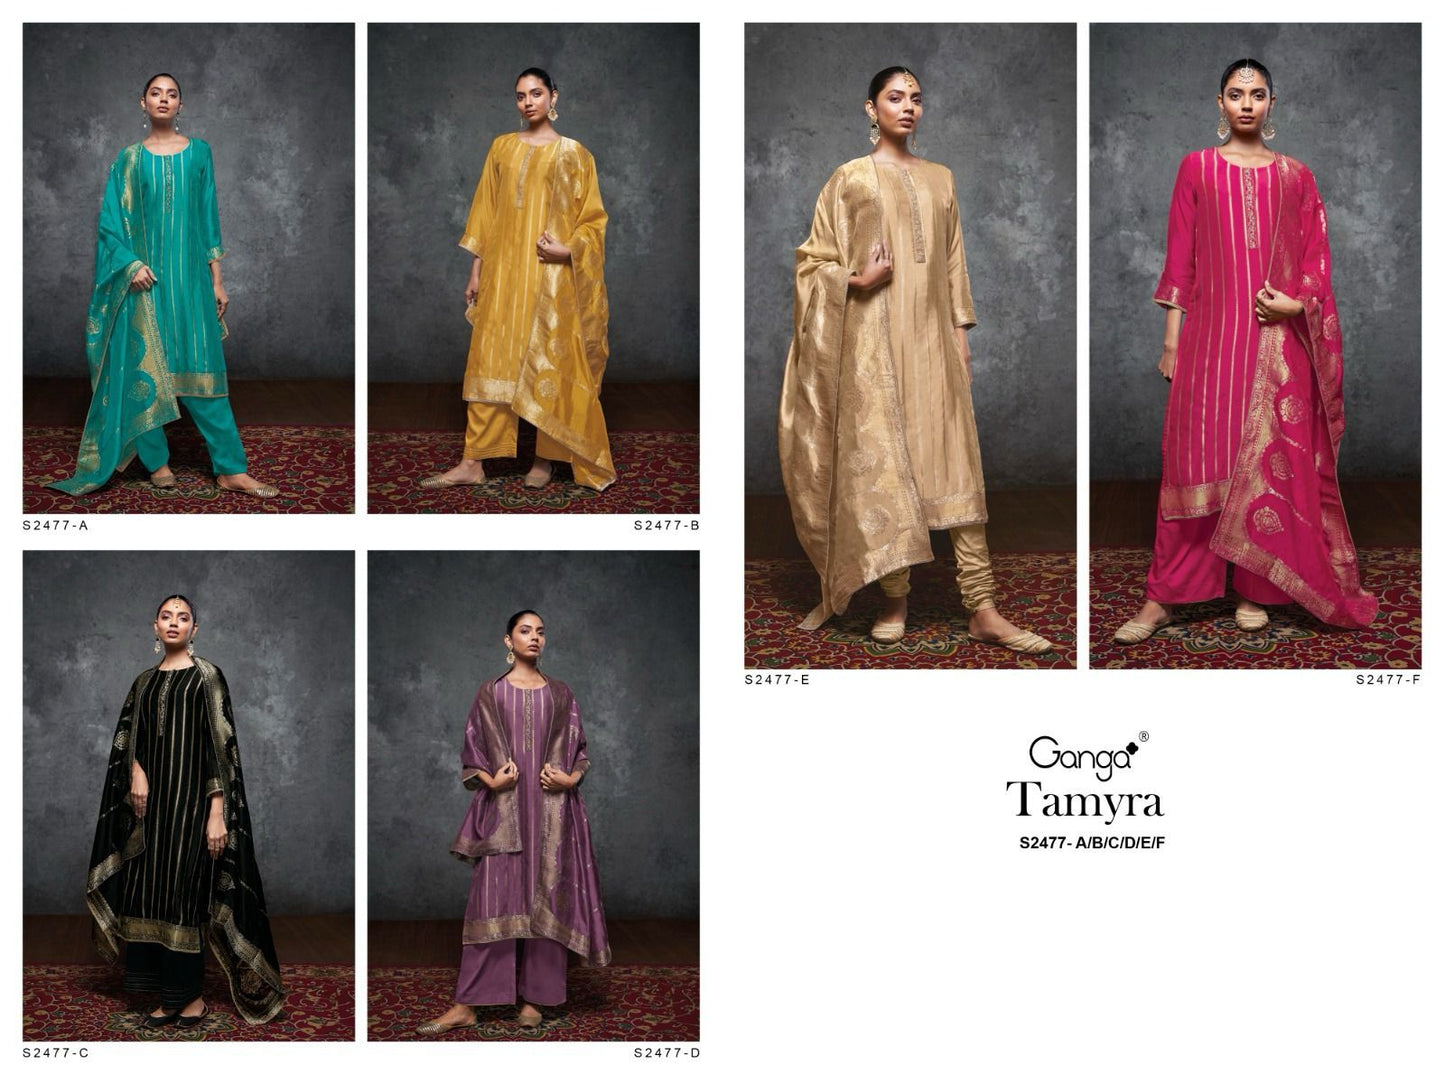 Tamyra 2477 Ganga Organza Plazzo Style Suits